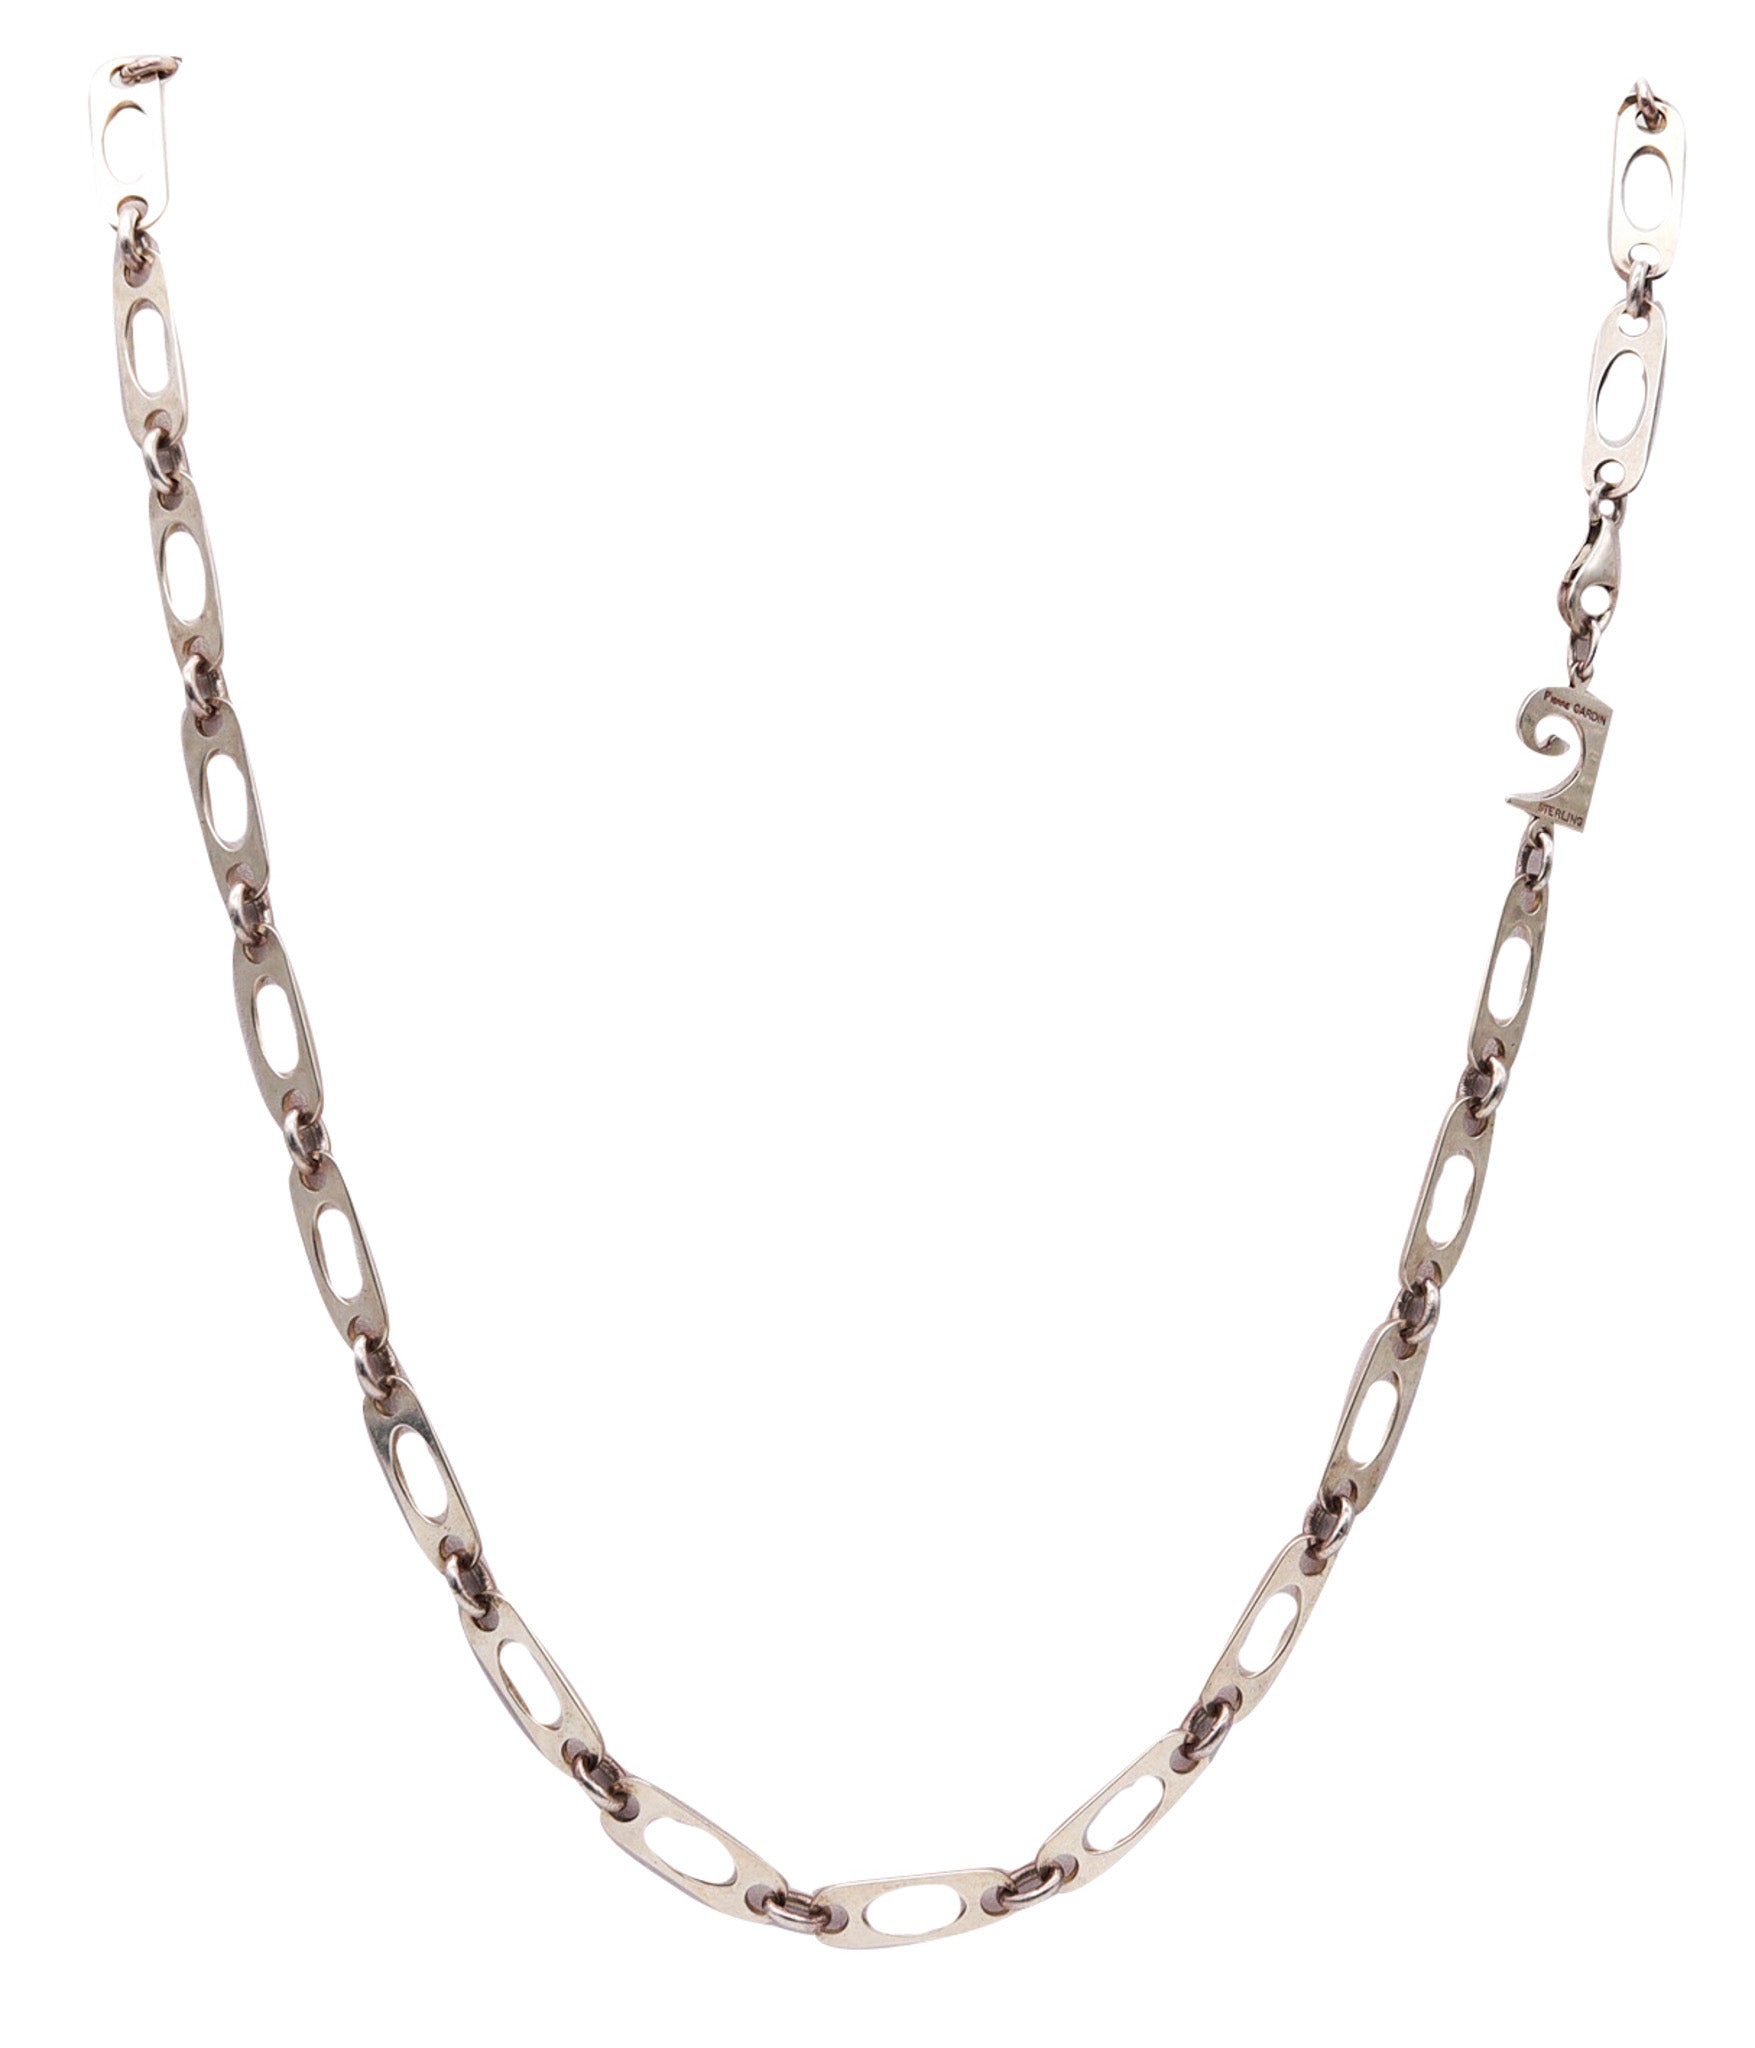 Pierre Cardin 1970 Paris Geometric Long Necklace Chain In .925 